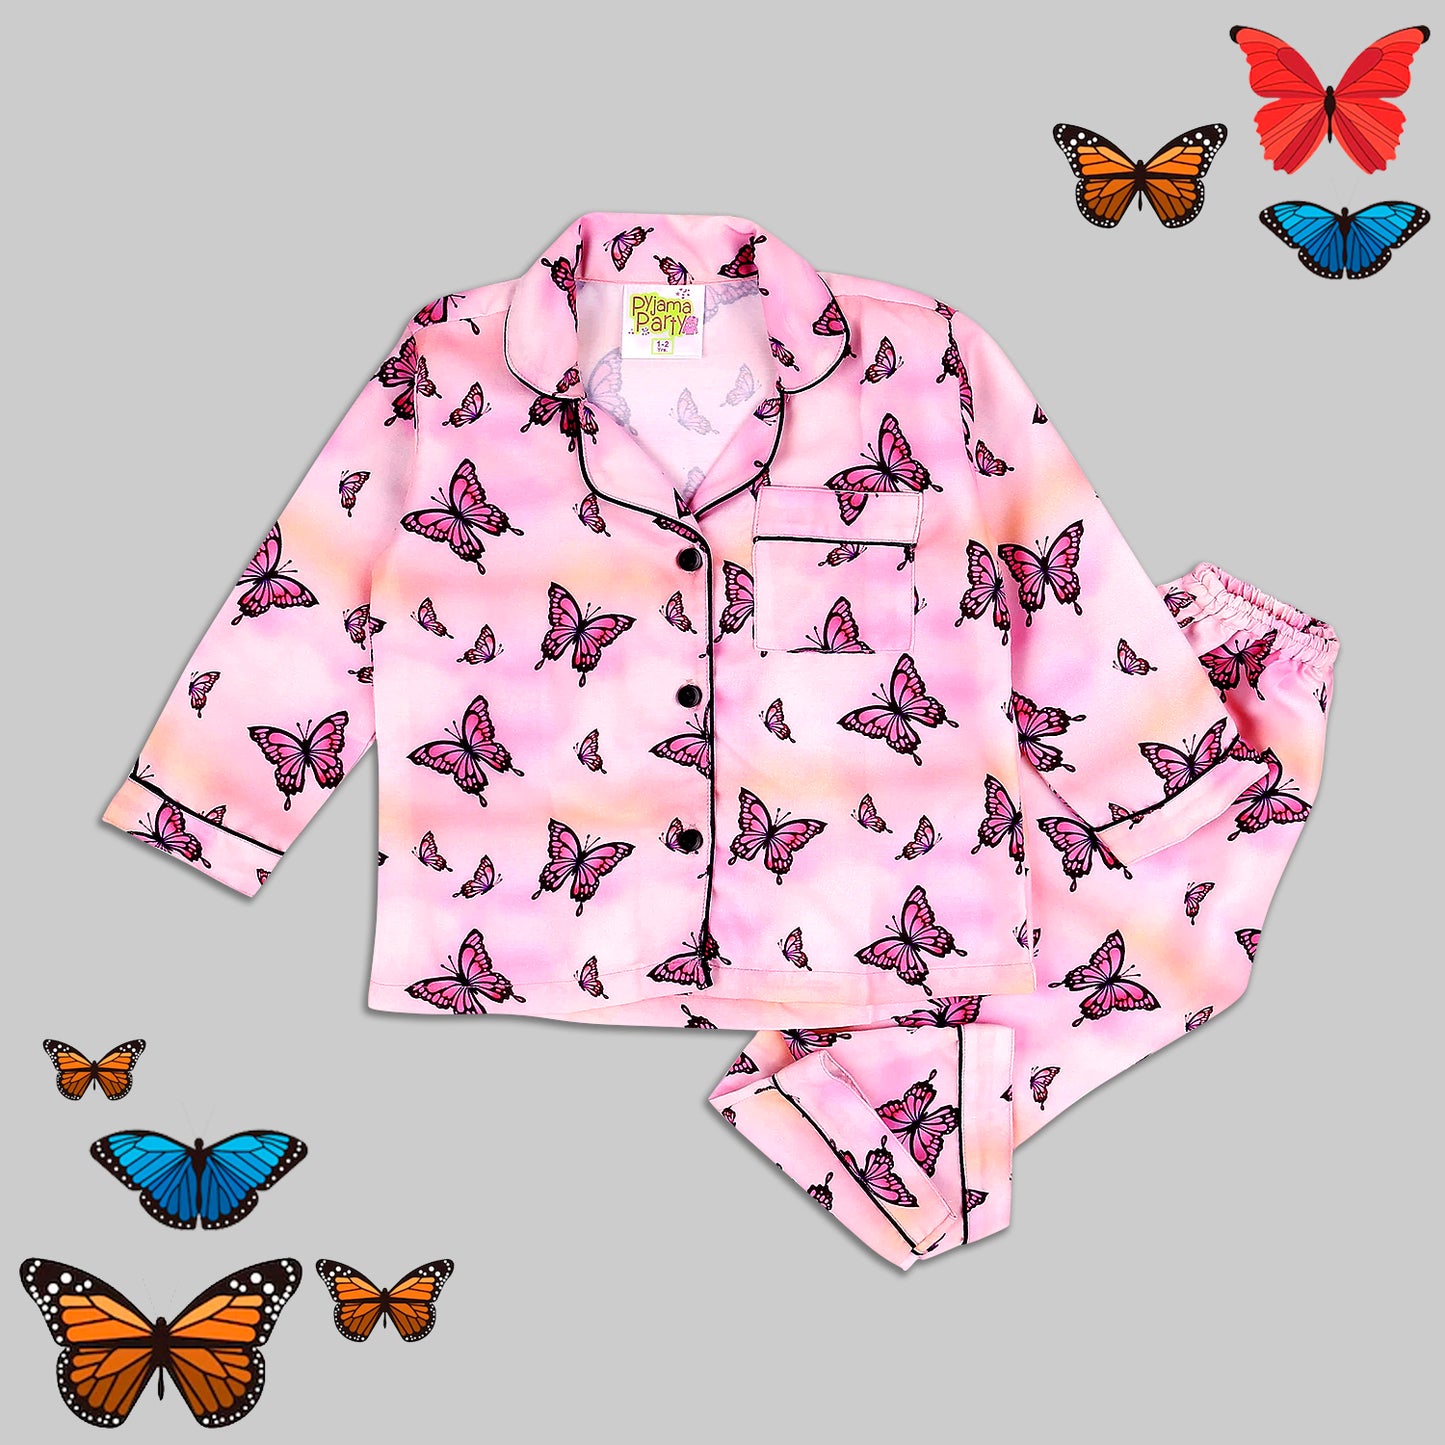 Butterfly Kids Pj Set - Cotton Rayon Pj Set with Notched Collar